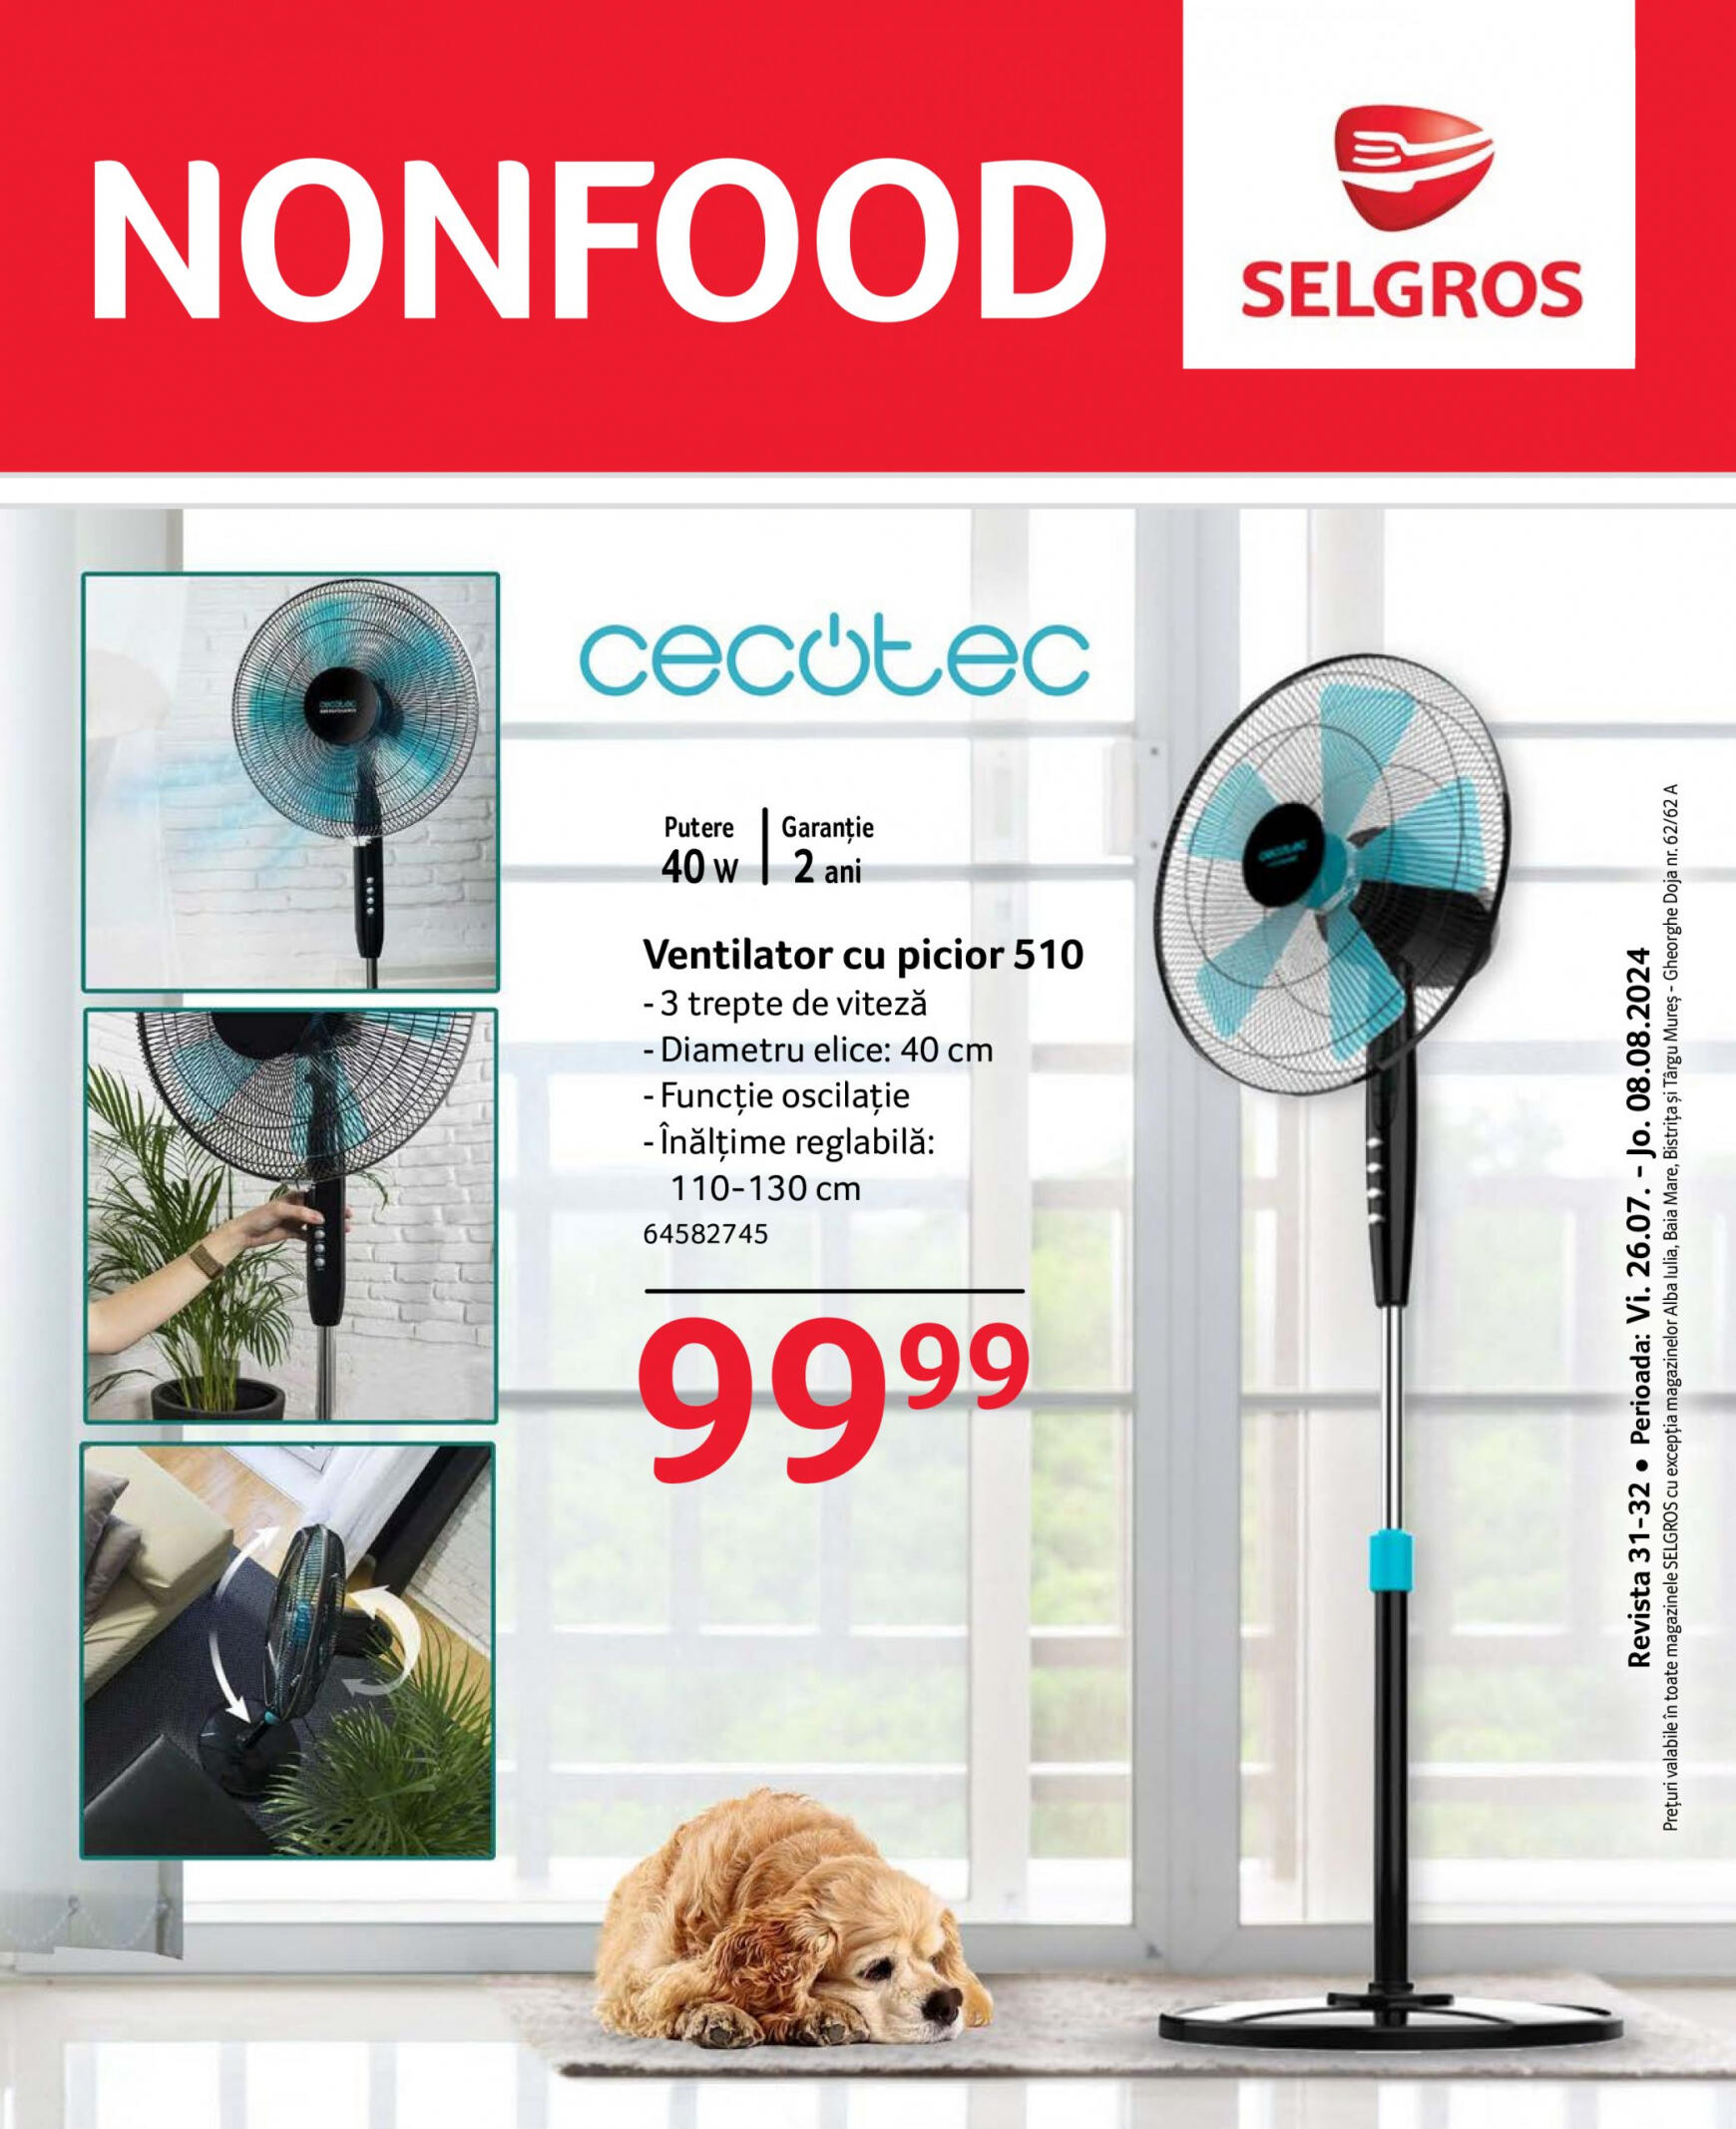 selgros - Catalog nou Selgros - Nonfood 26.07. - 08.08.